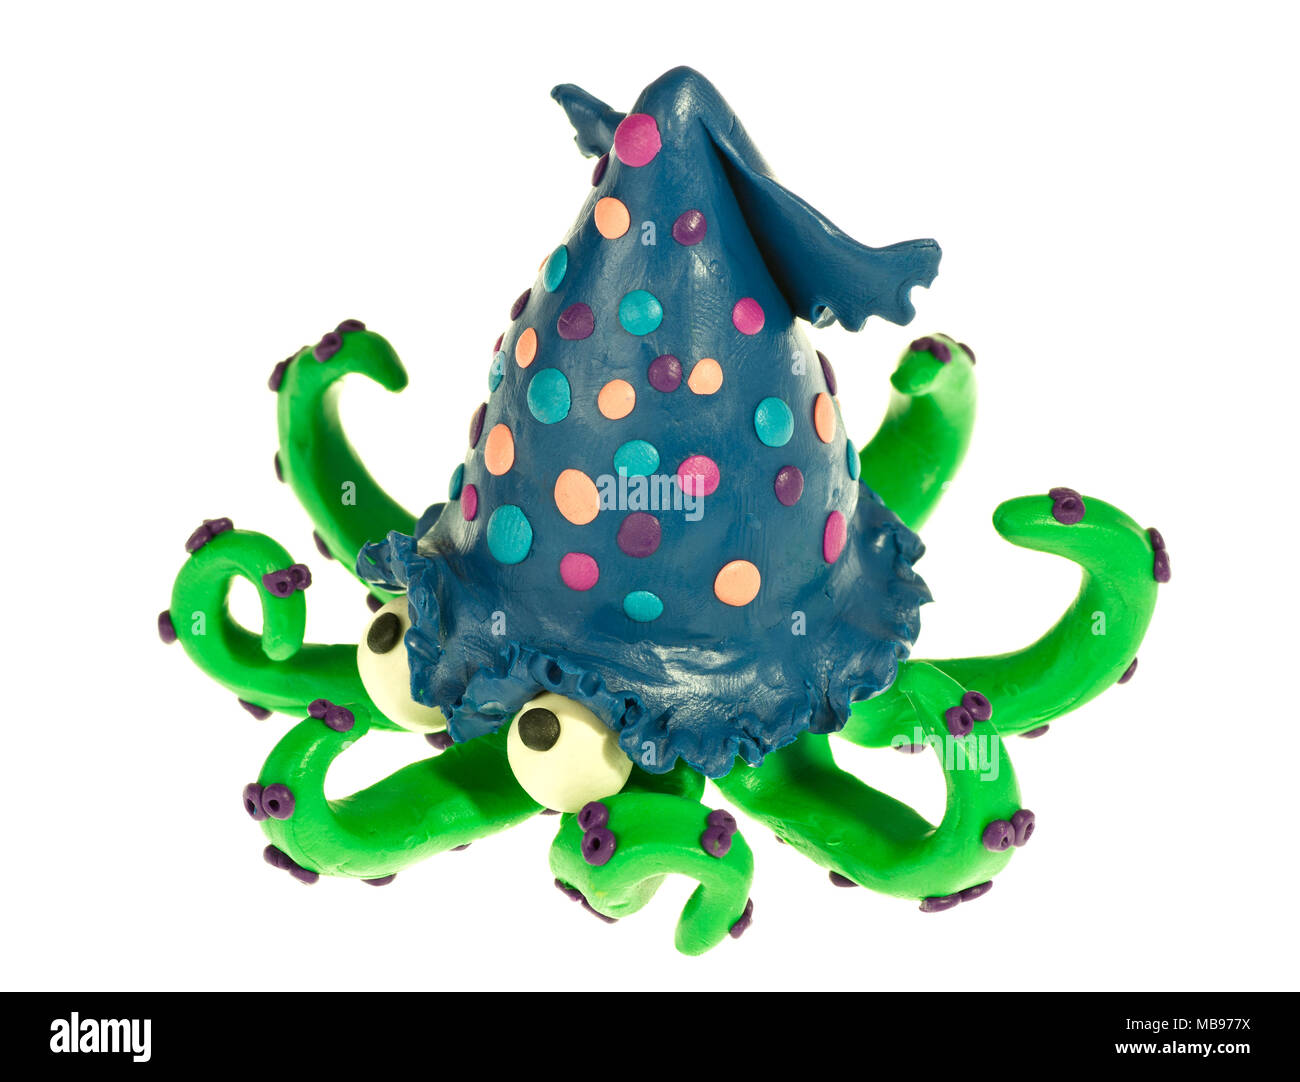 Funny Squid made of plasticine Stock Photo - Alamy